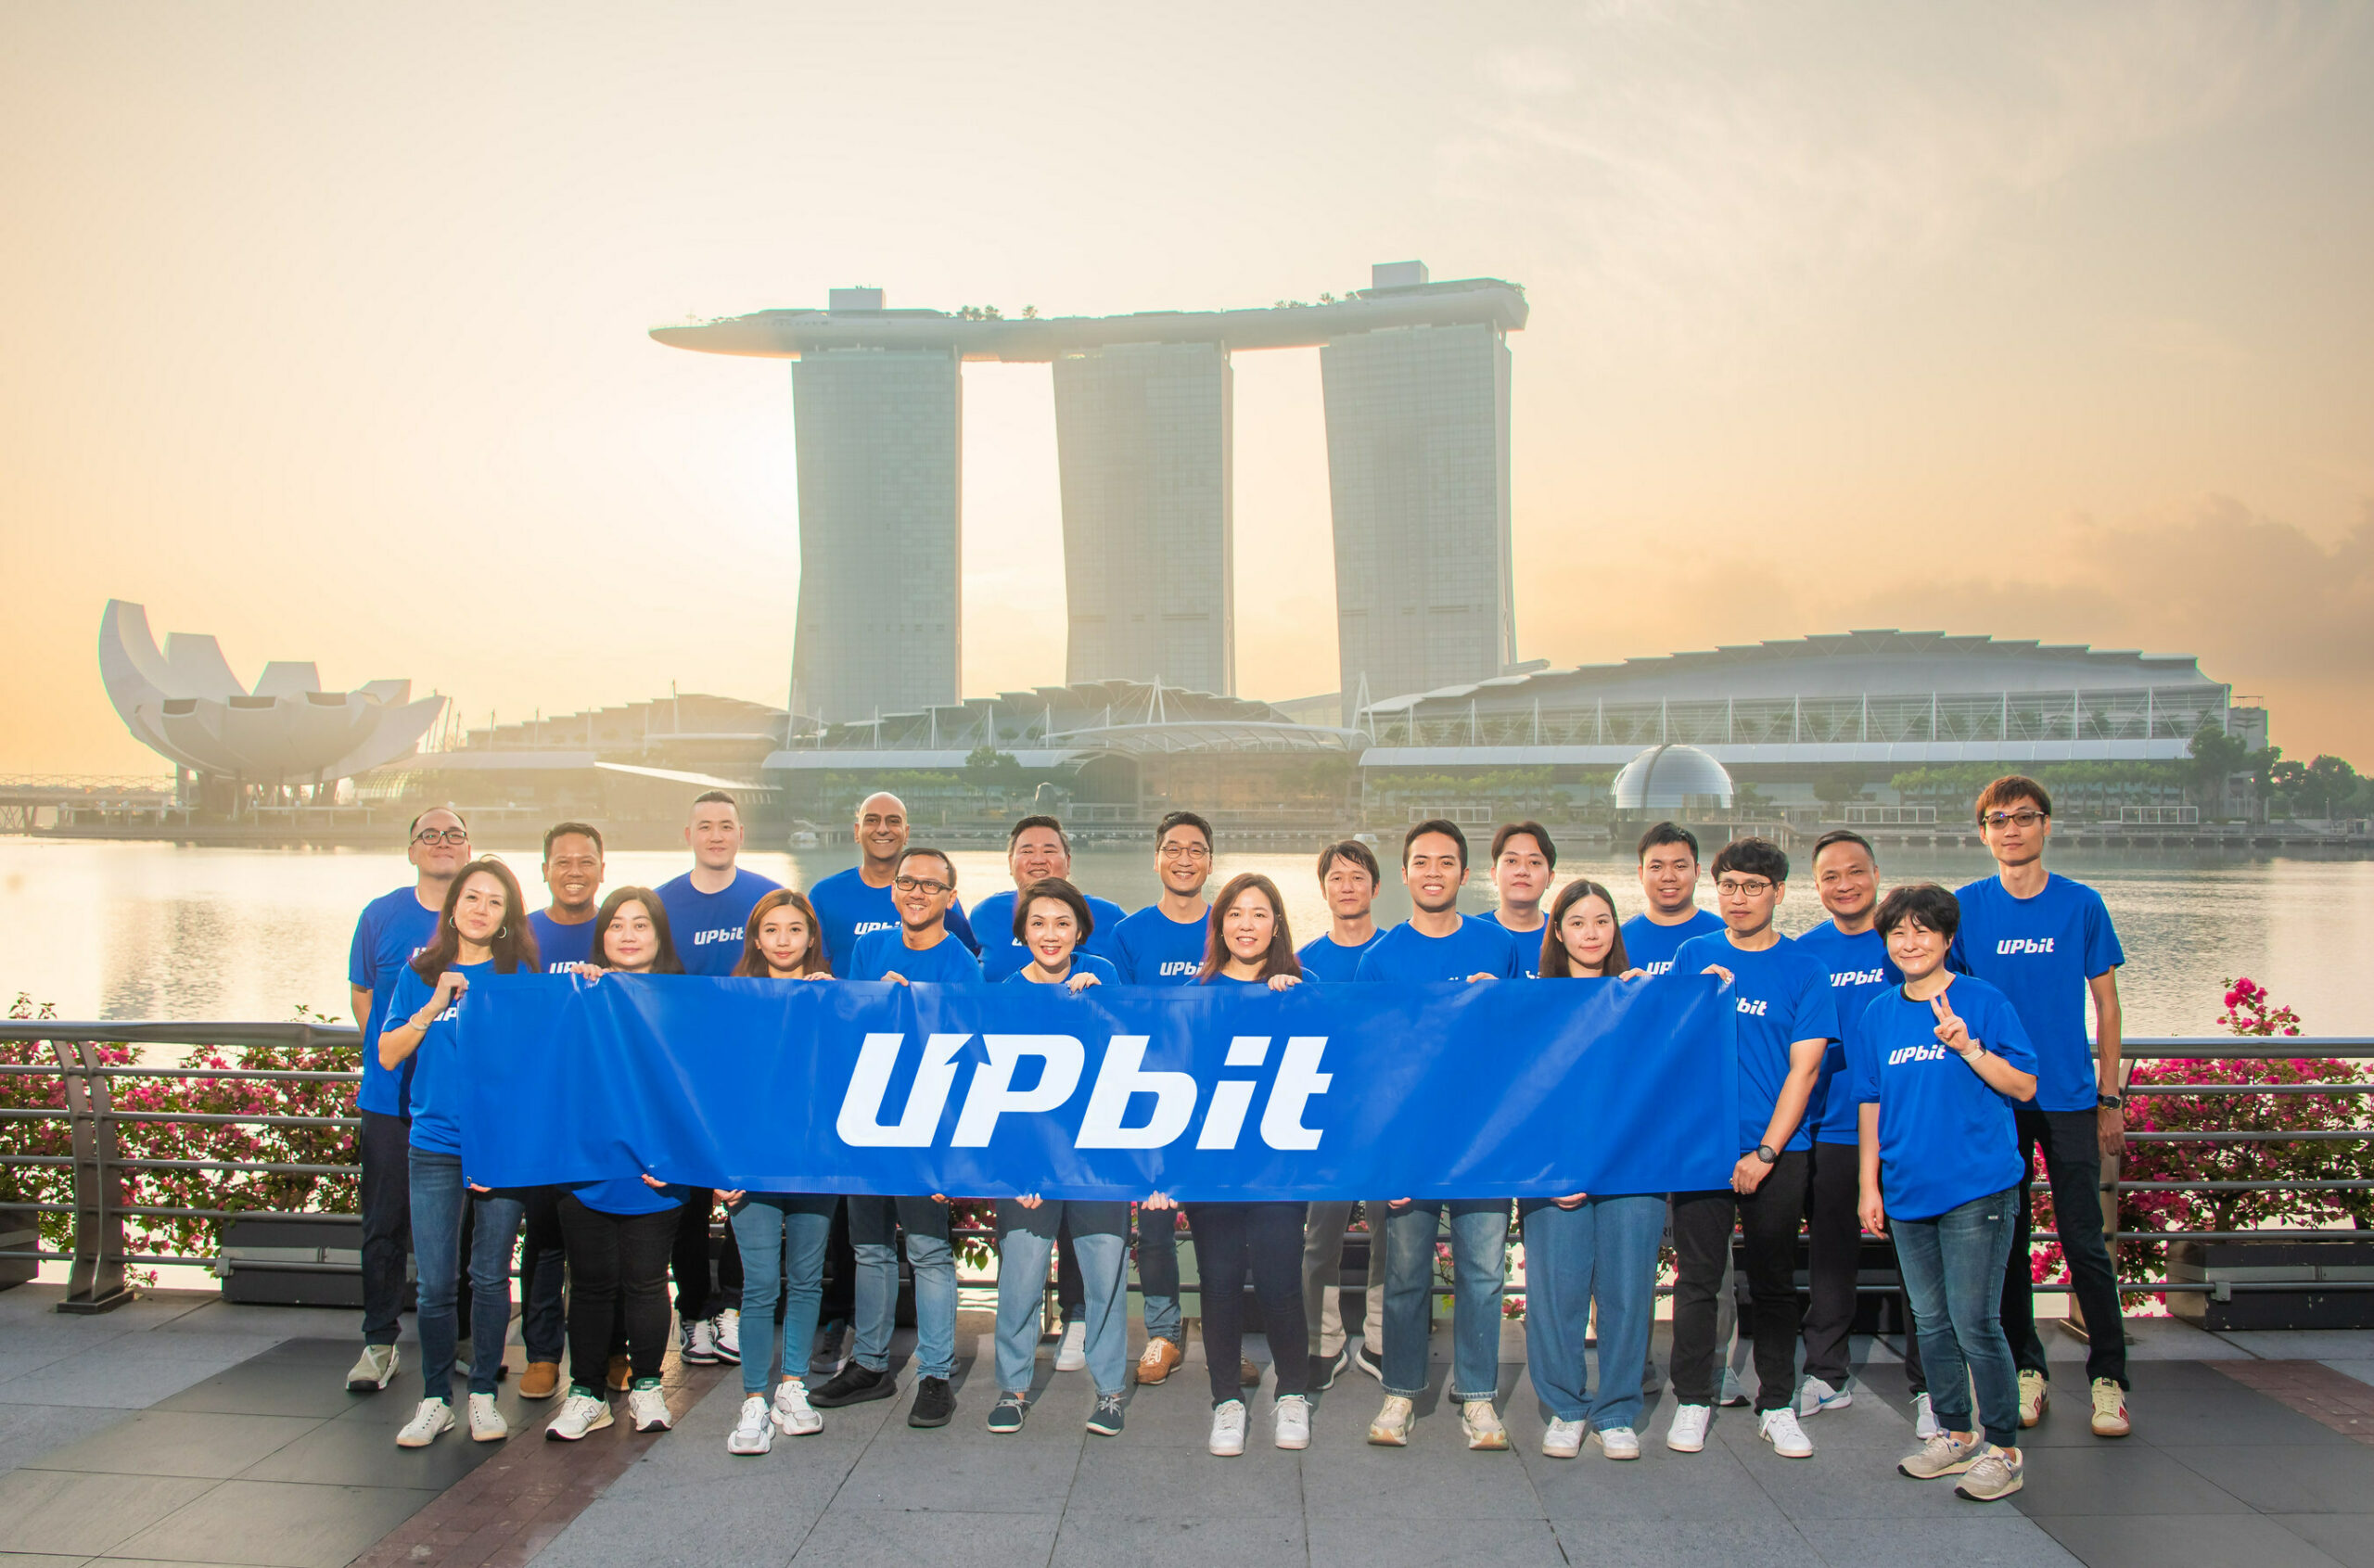 L'exchange sudcoreano Upbit ottiene la licenza iniziale da Singapore